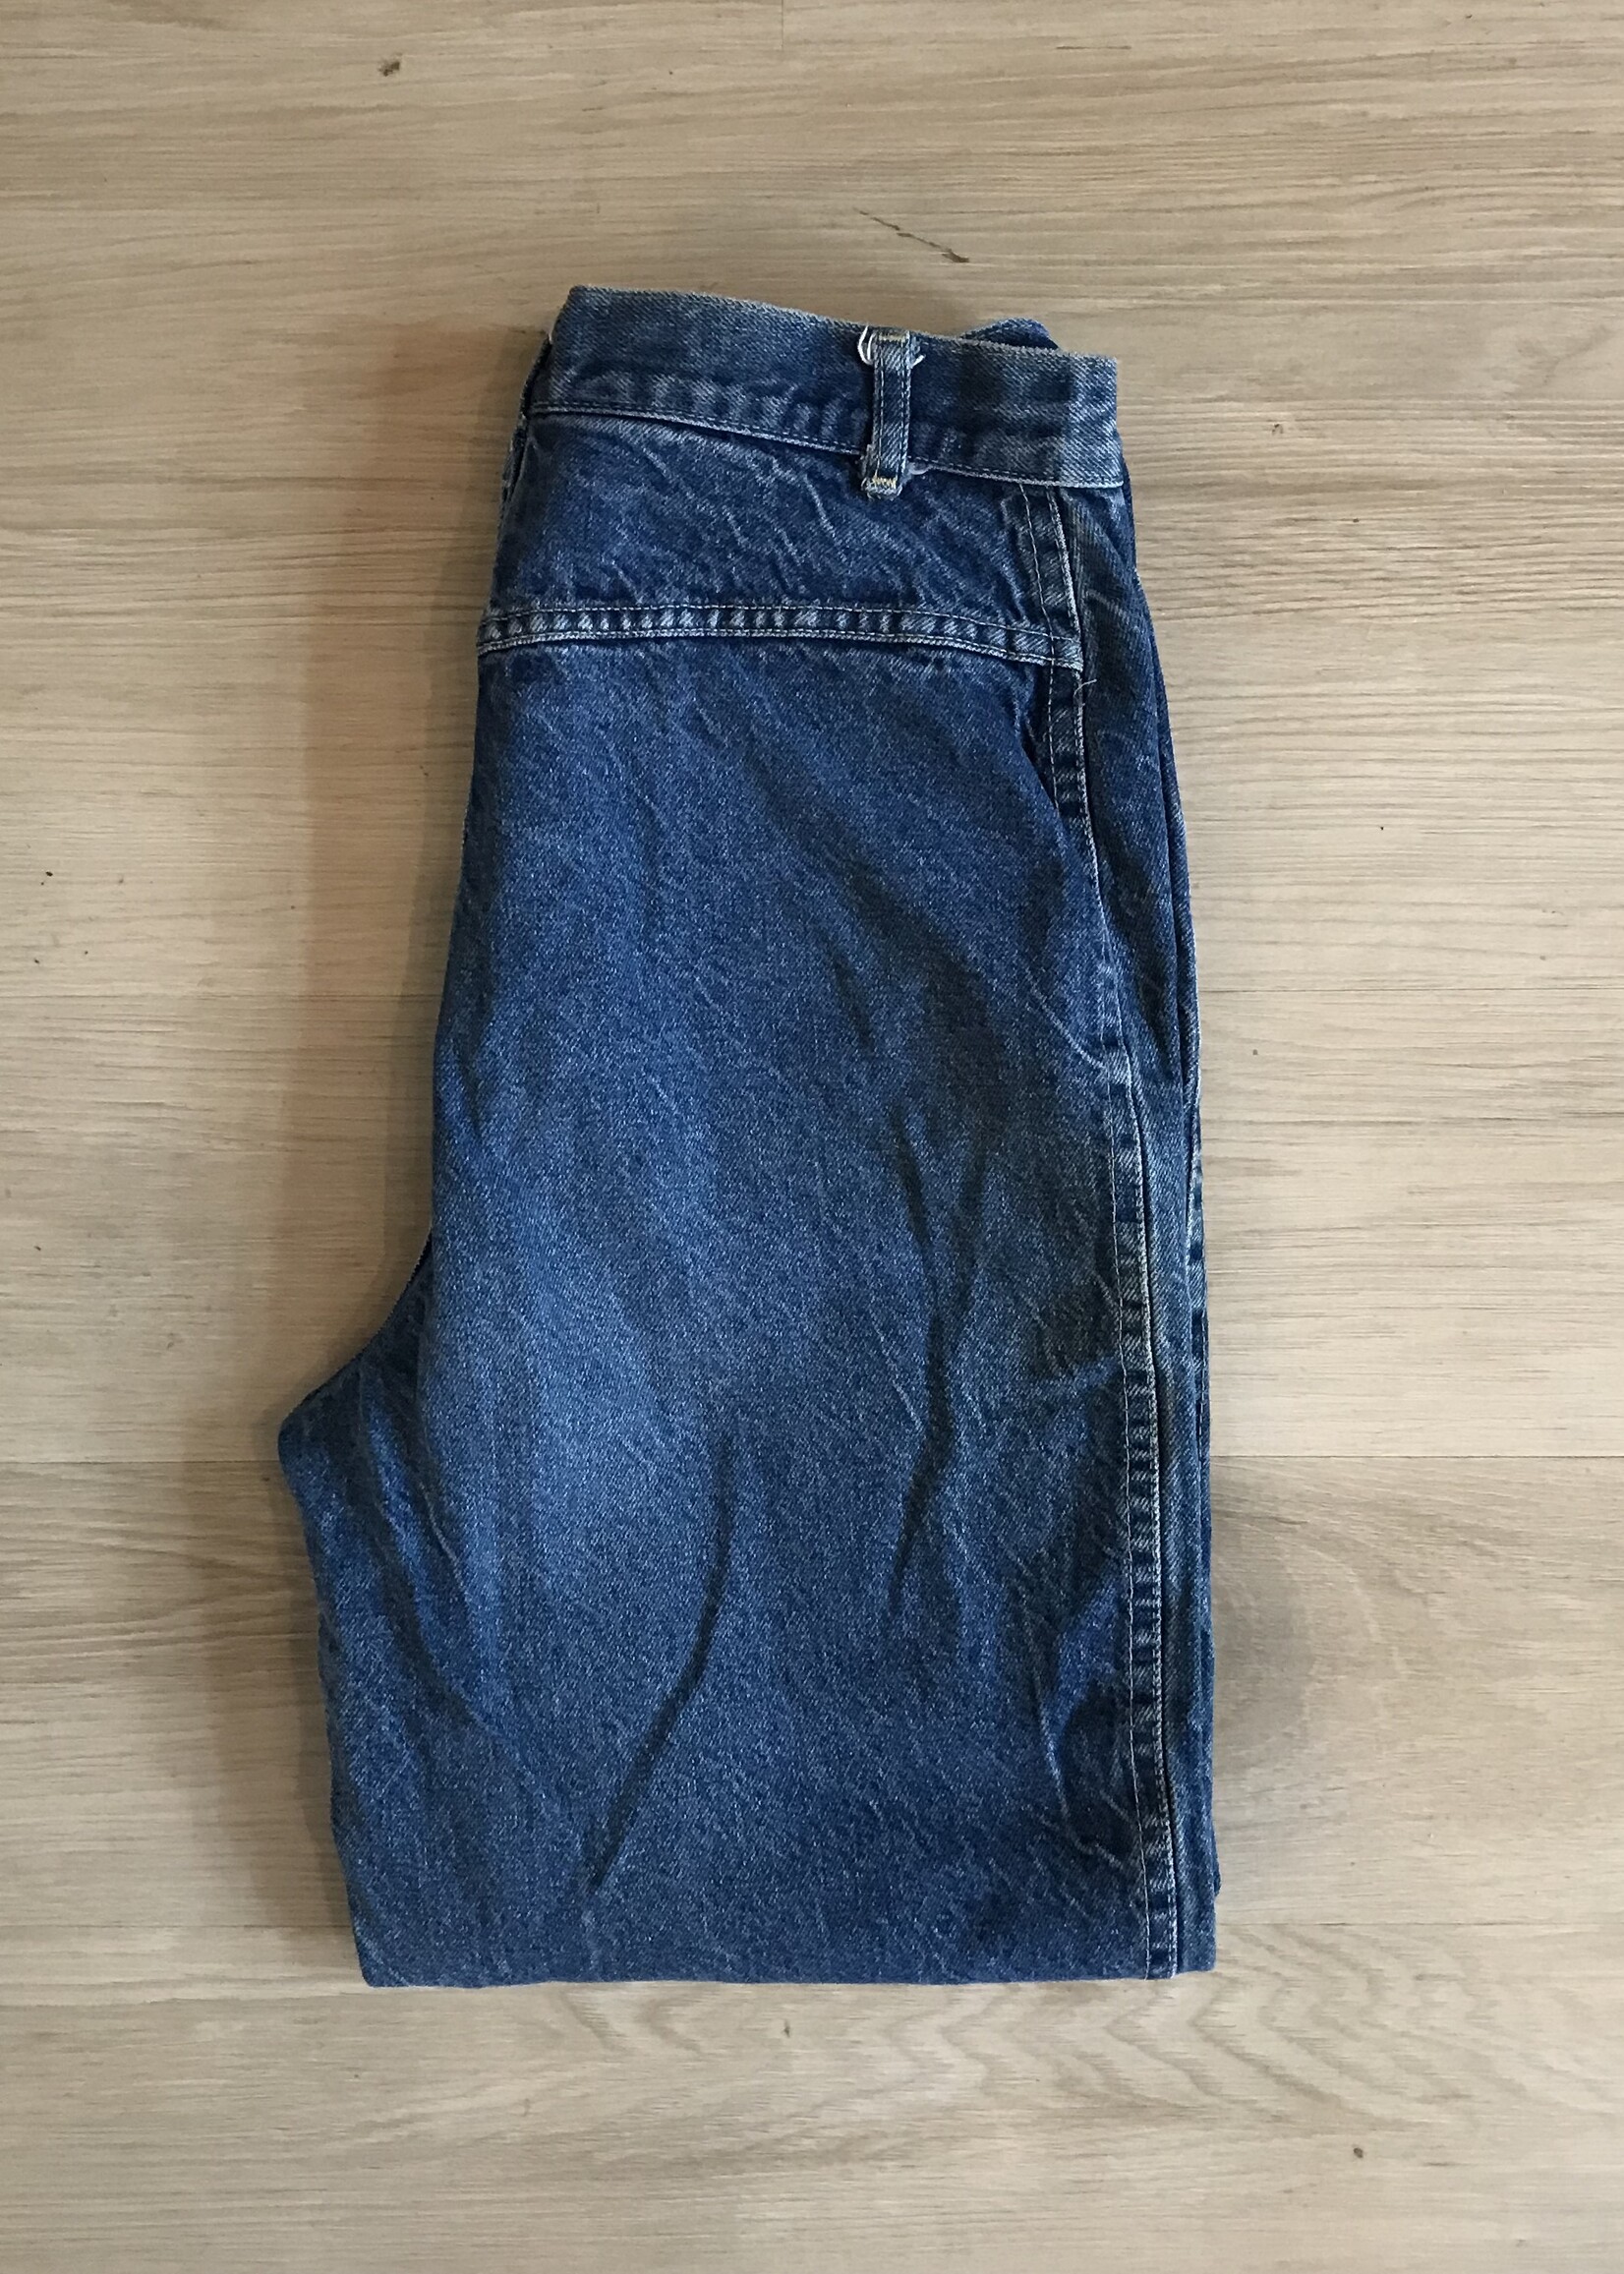 12091	sears jeans sz 14